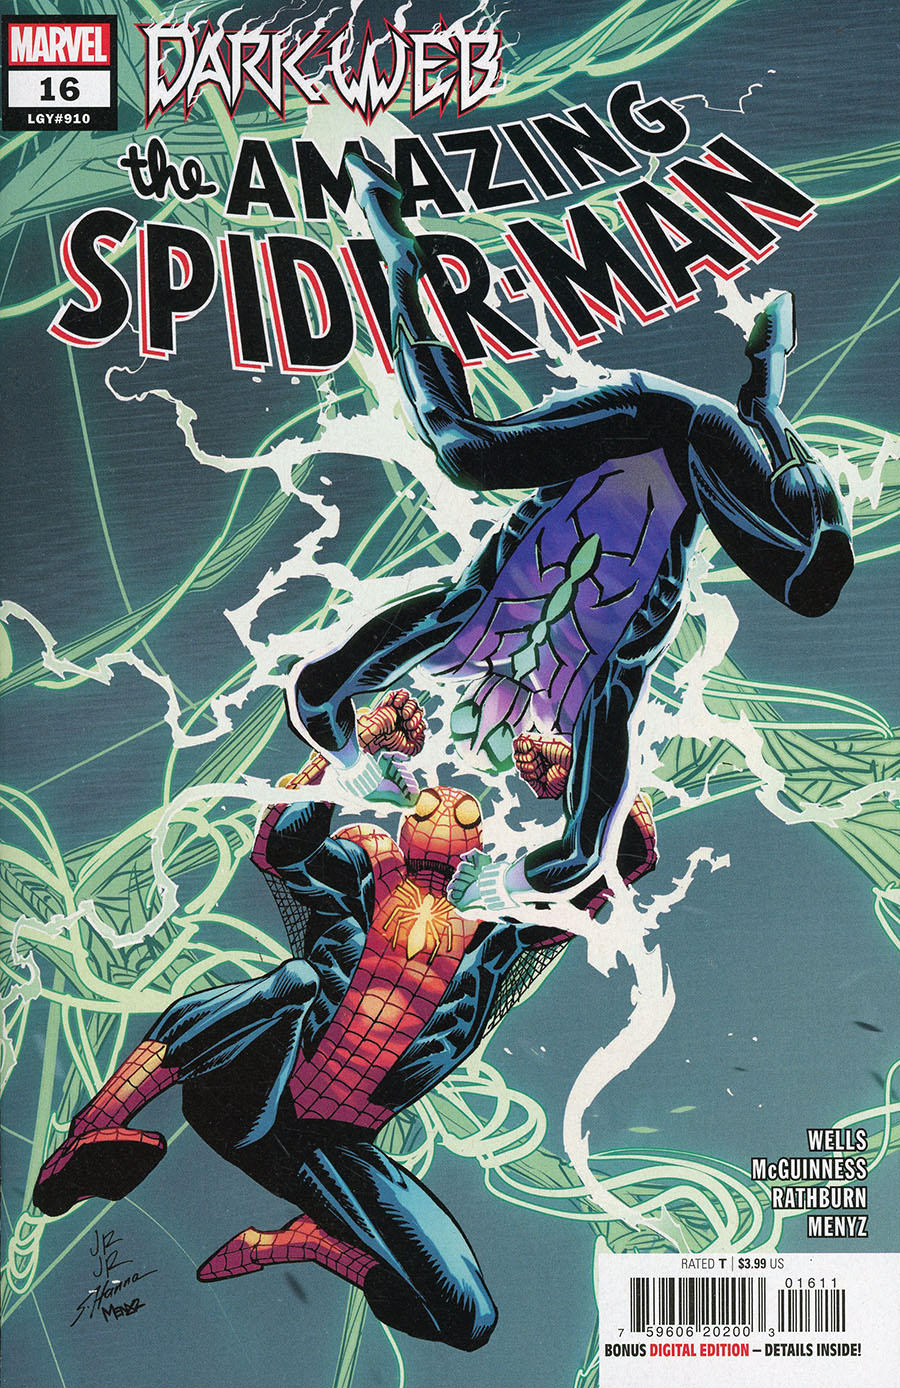 Amazing Spider-Man Vol 6 #16 Cover A Regular John Romita Jr Cover (Dark Web Tie-In)